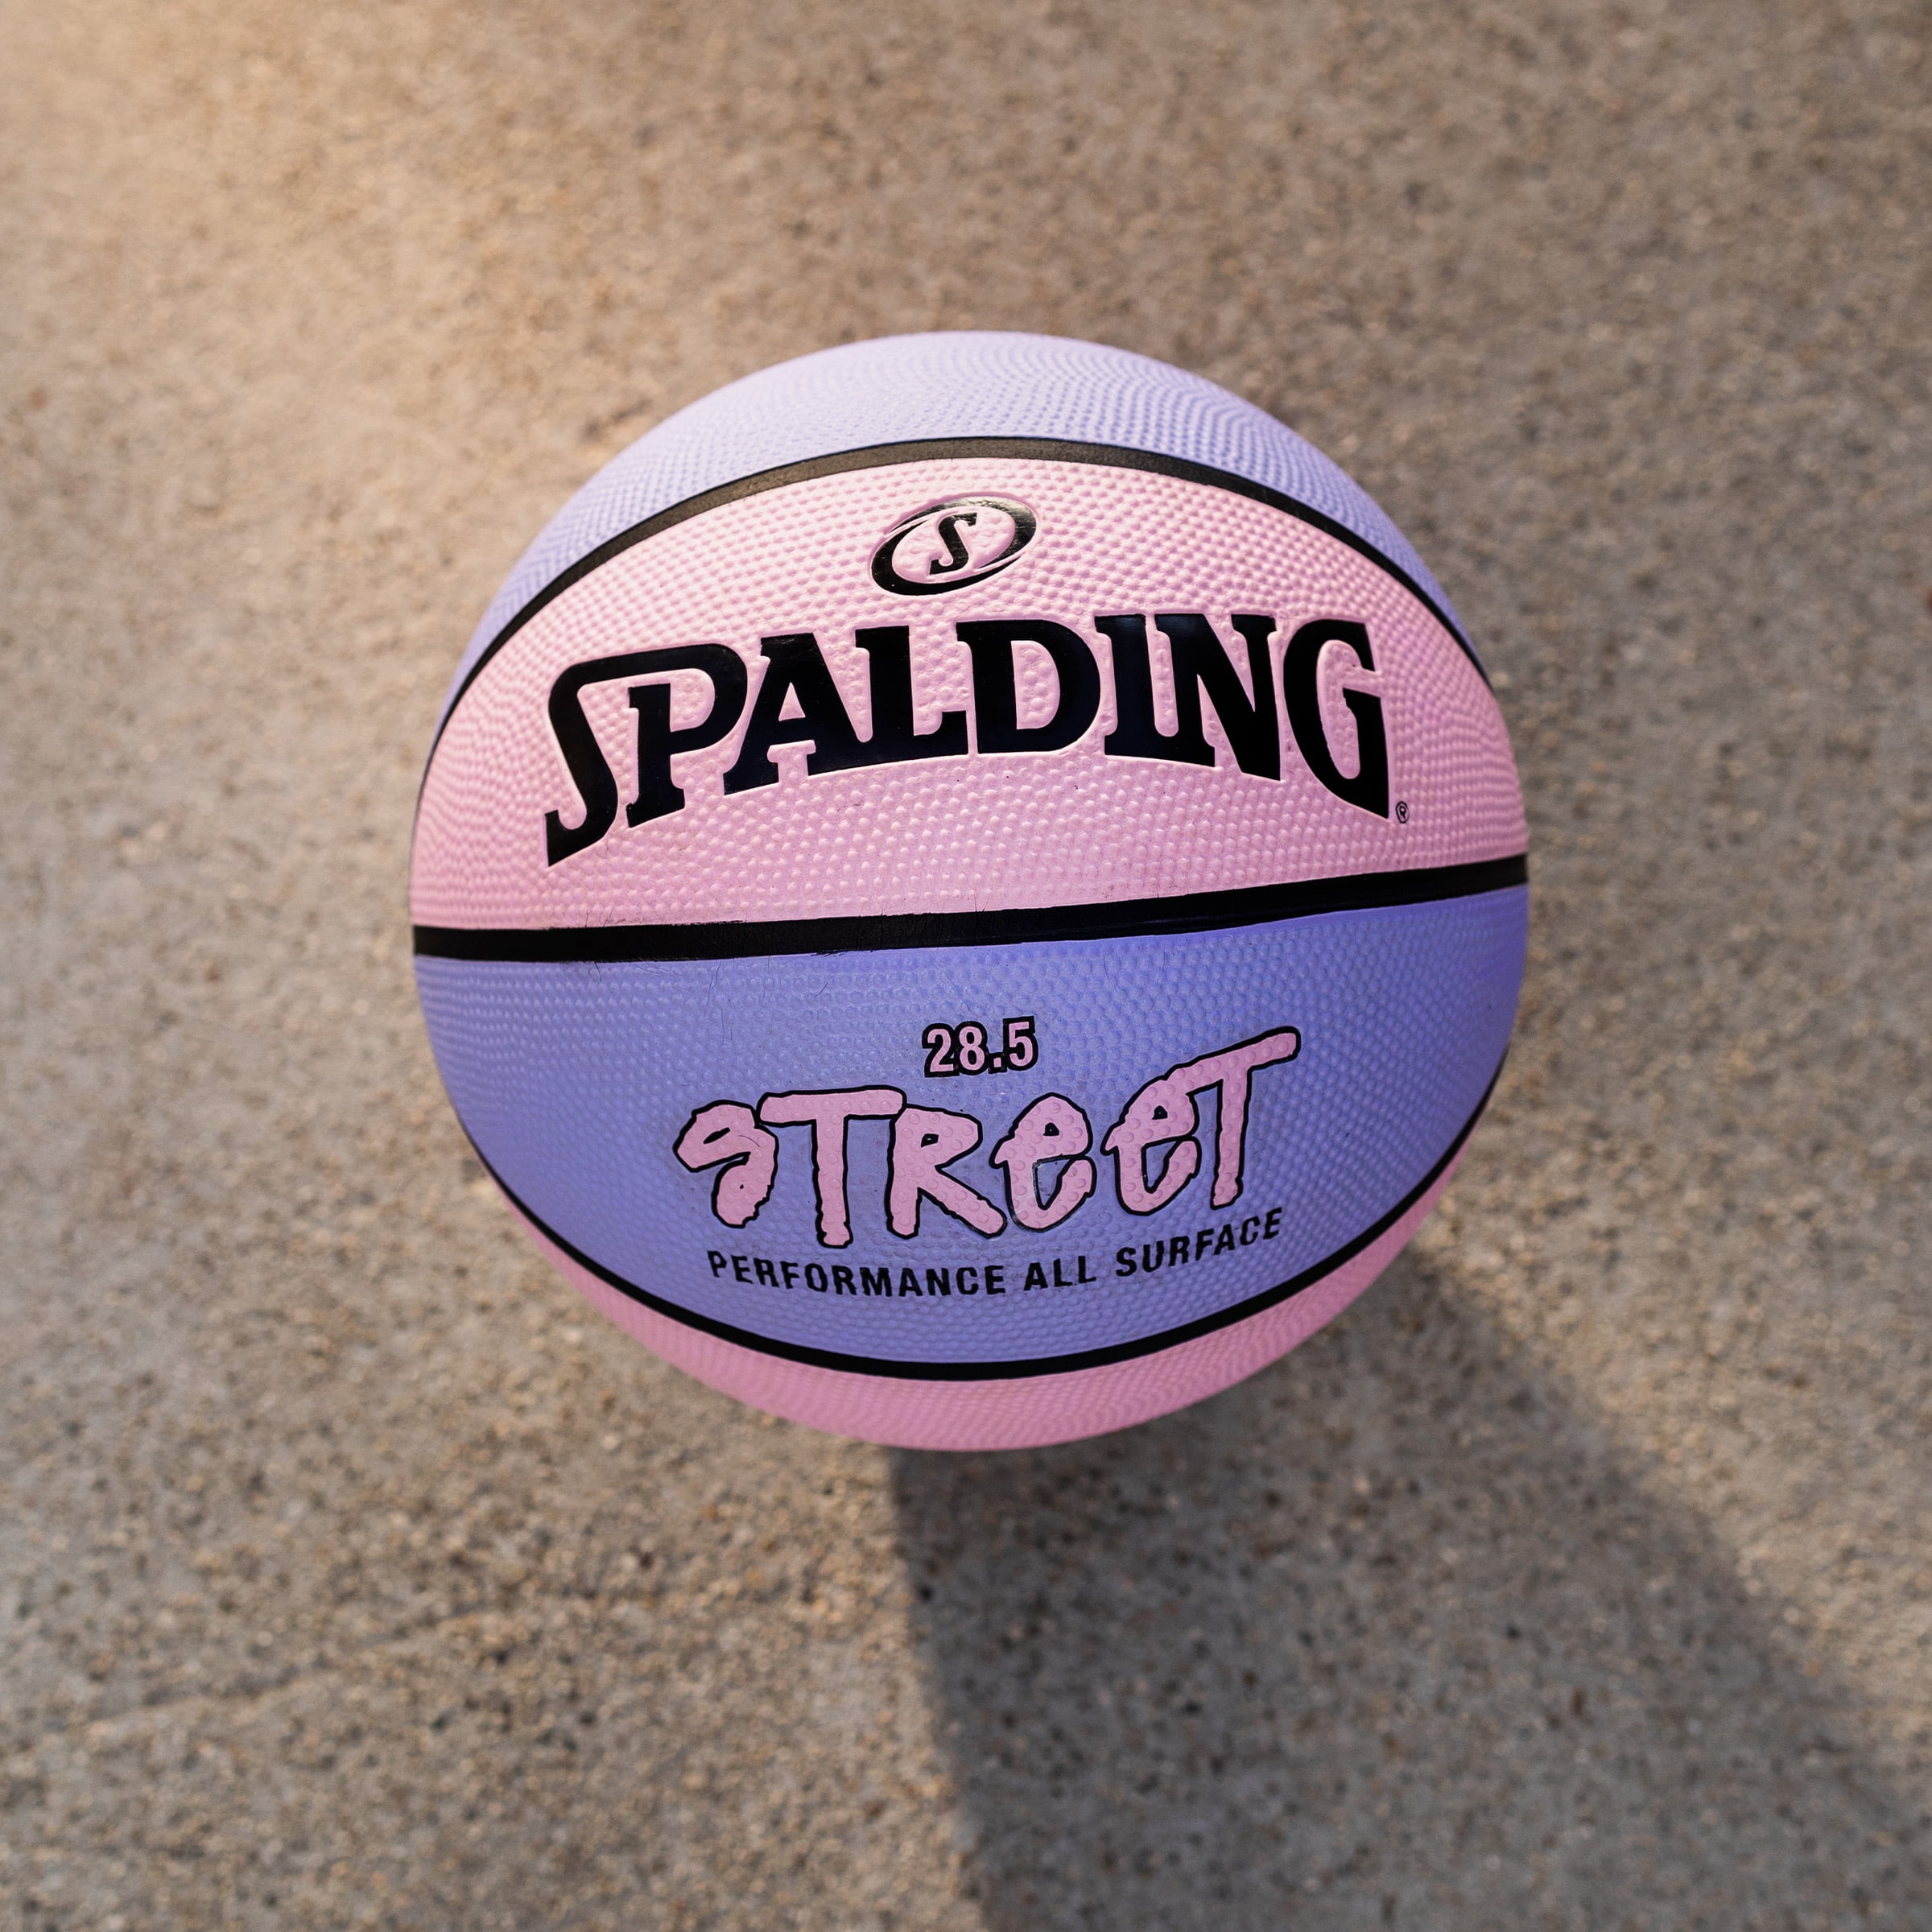 Spalding Official NBA Street Basketball - Size 6